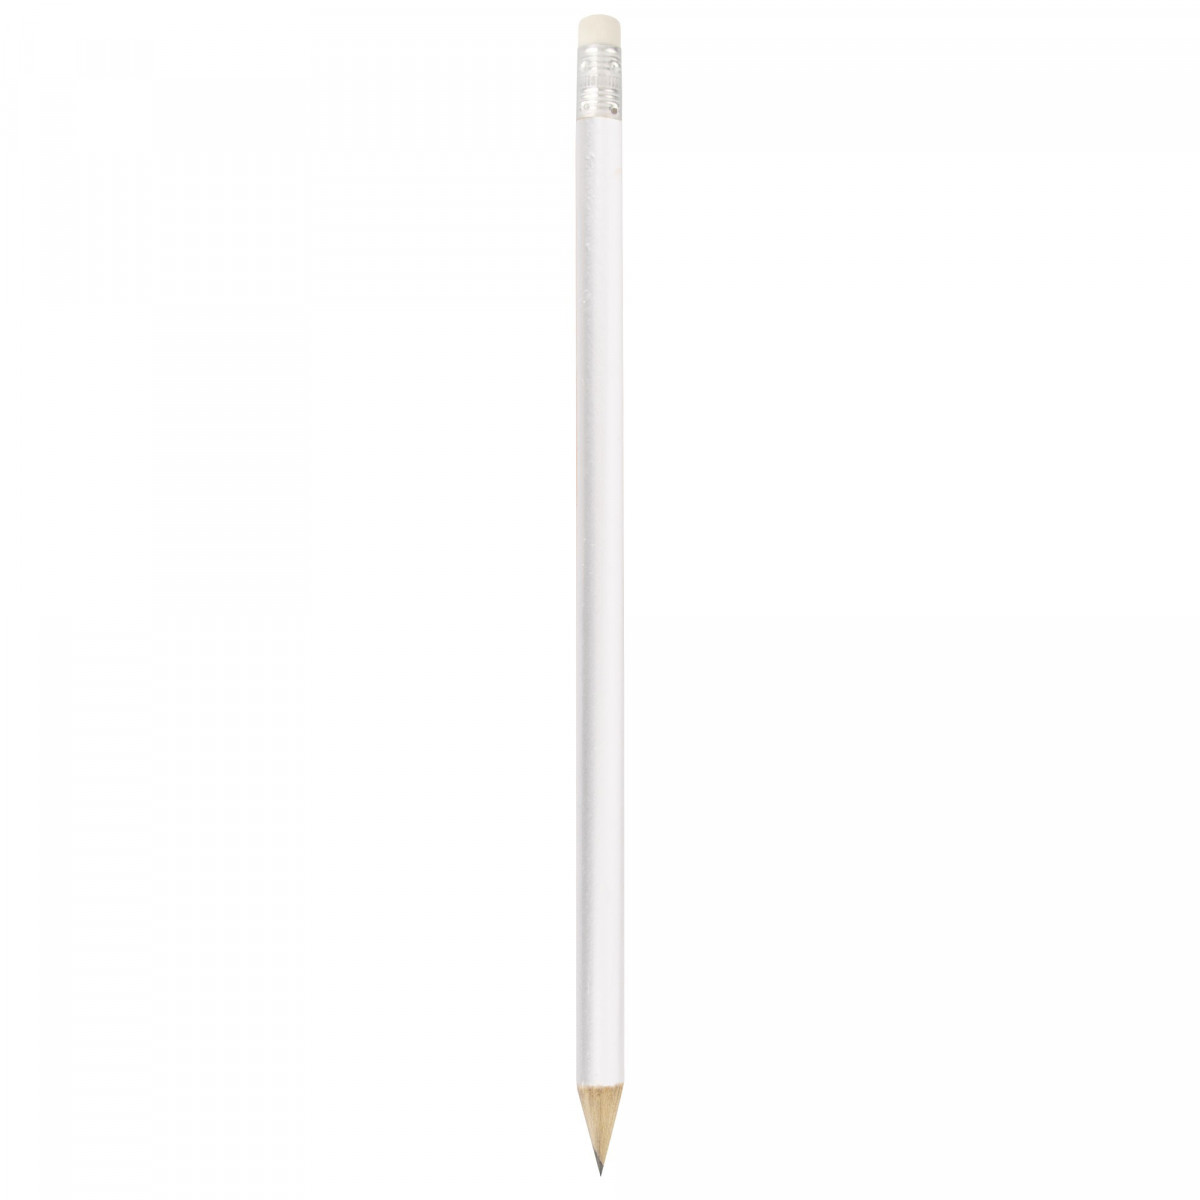 Crayon en bois blanc avec gomme